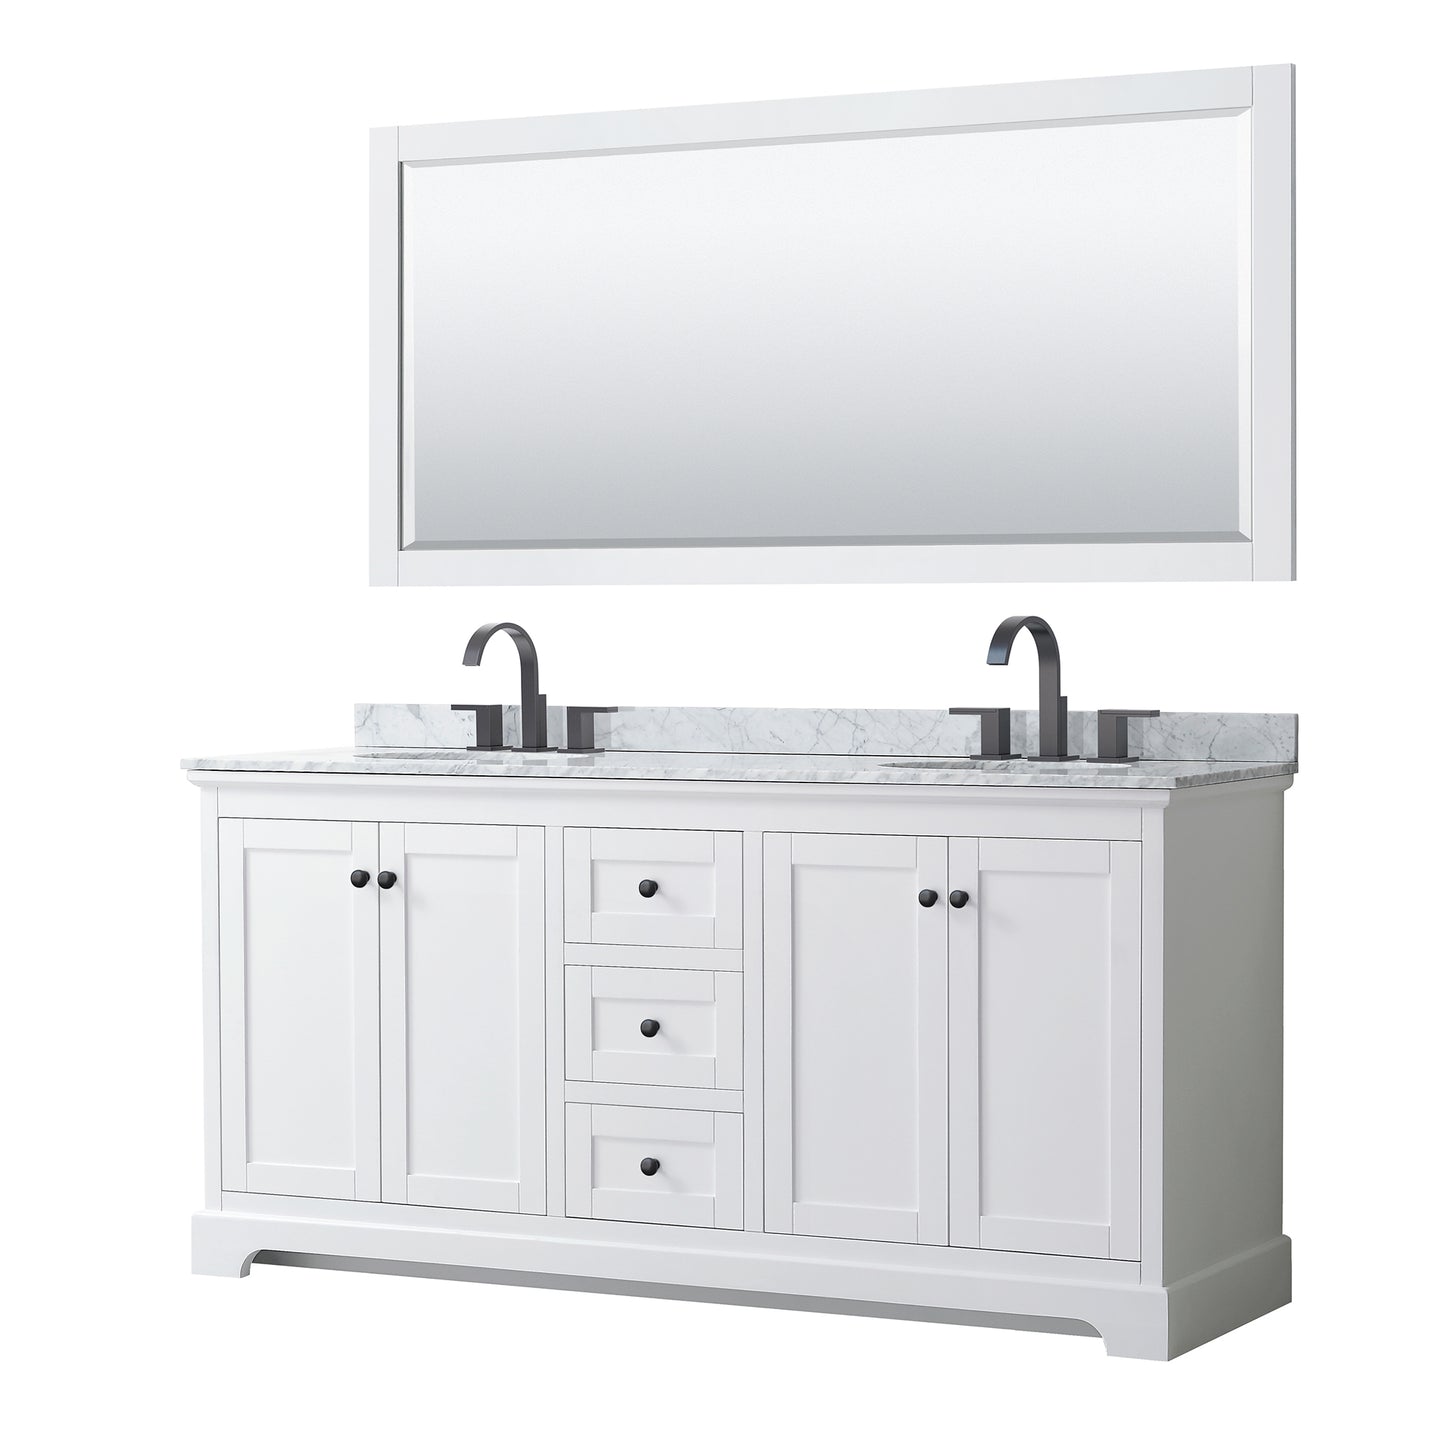 Wyndham Avery 72 Inch Double Bathroom Vanity White Carrara Marble Countertop, Undermount Oval Sinks in Matte Black Trim with 70 Inch Mirror - Luxe Bathroom Vanities